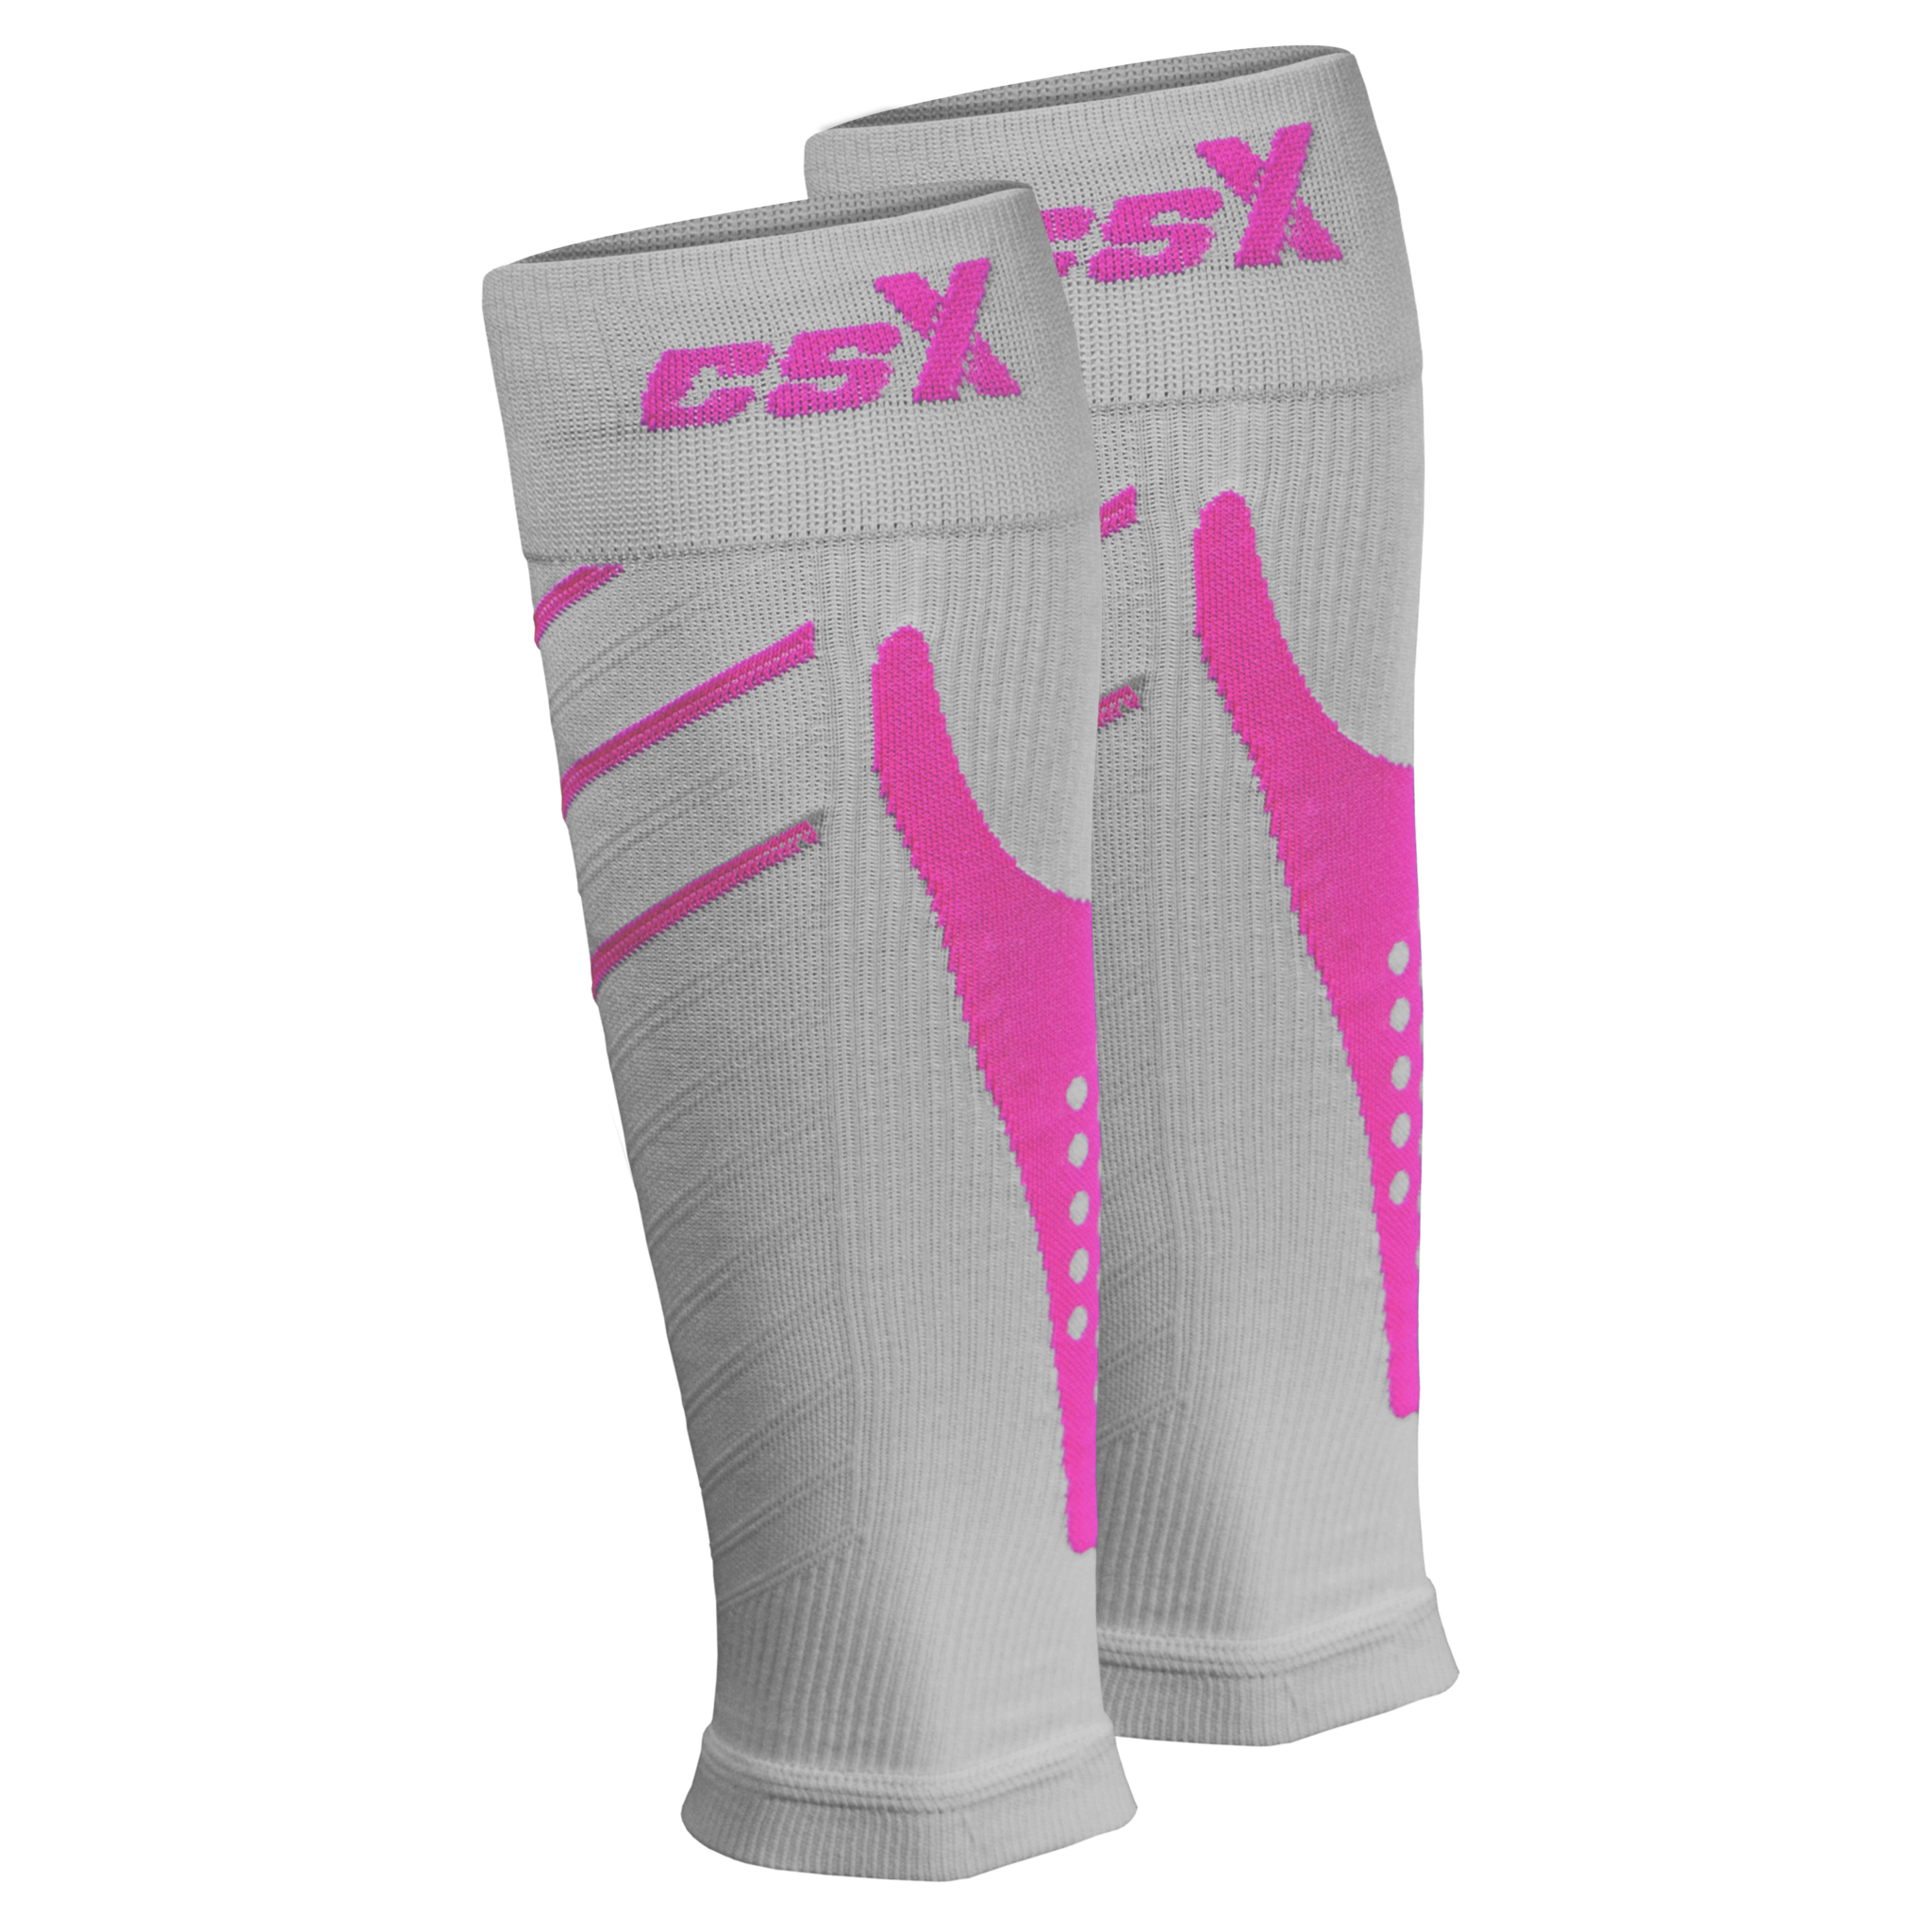 CSX 15-20 mmHg Compression Calf Sleeves Pink on Grey – Walton Medical